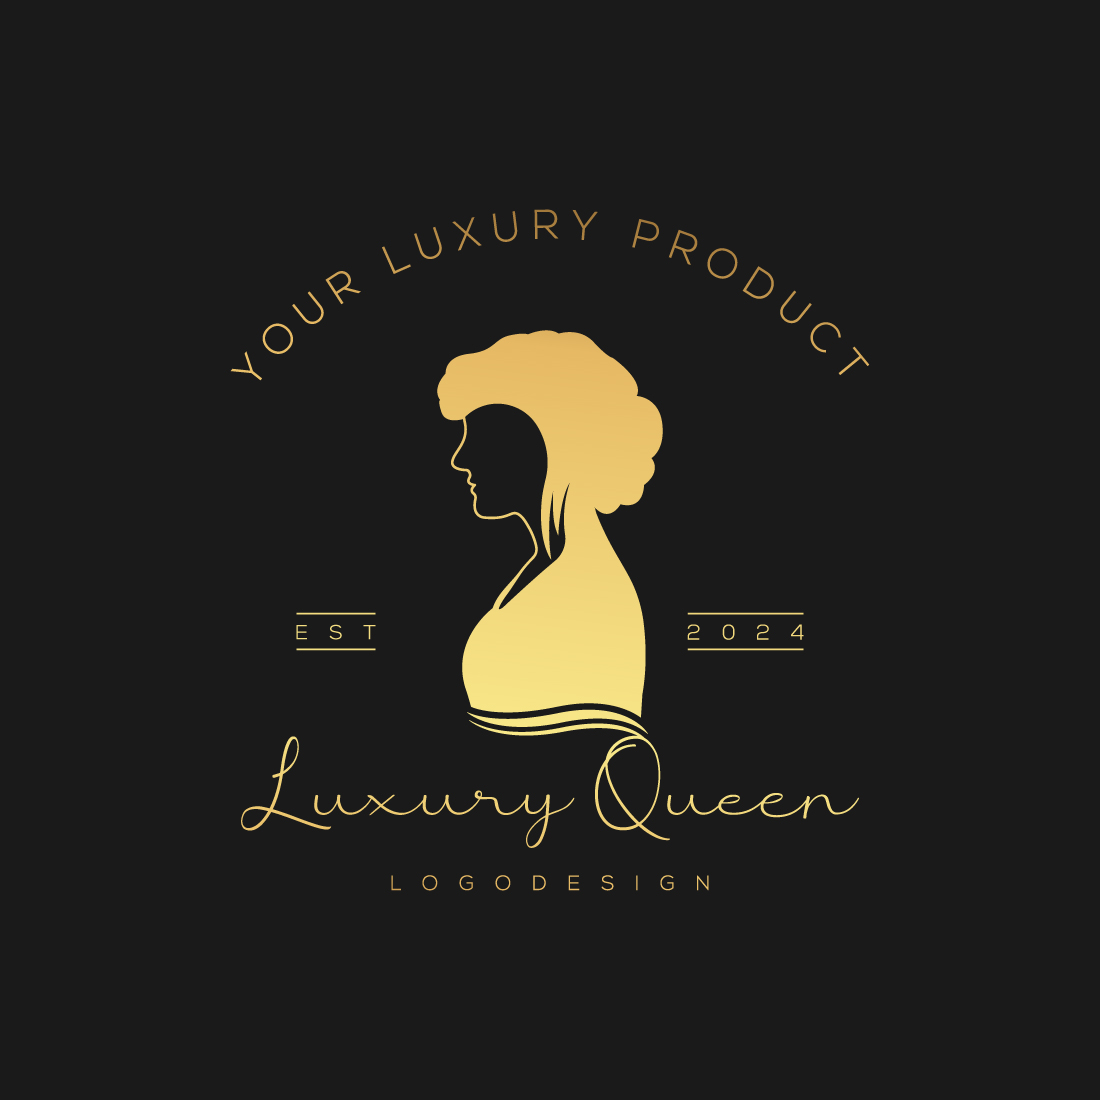 Golden Color Luxury Urban Logo design preview image.